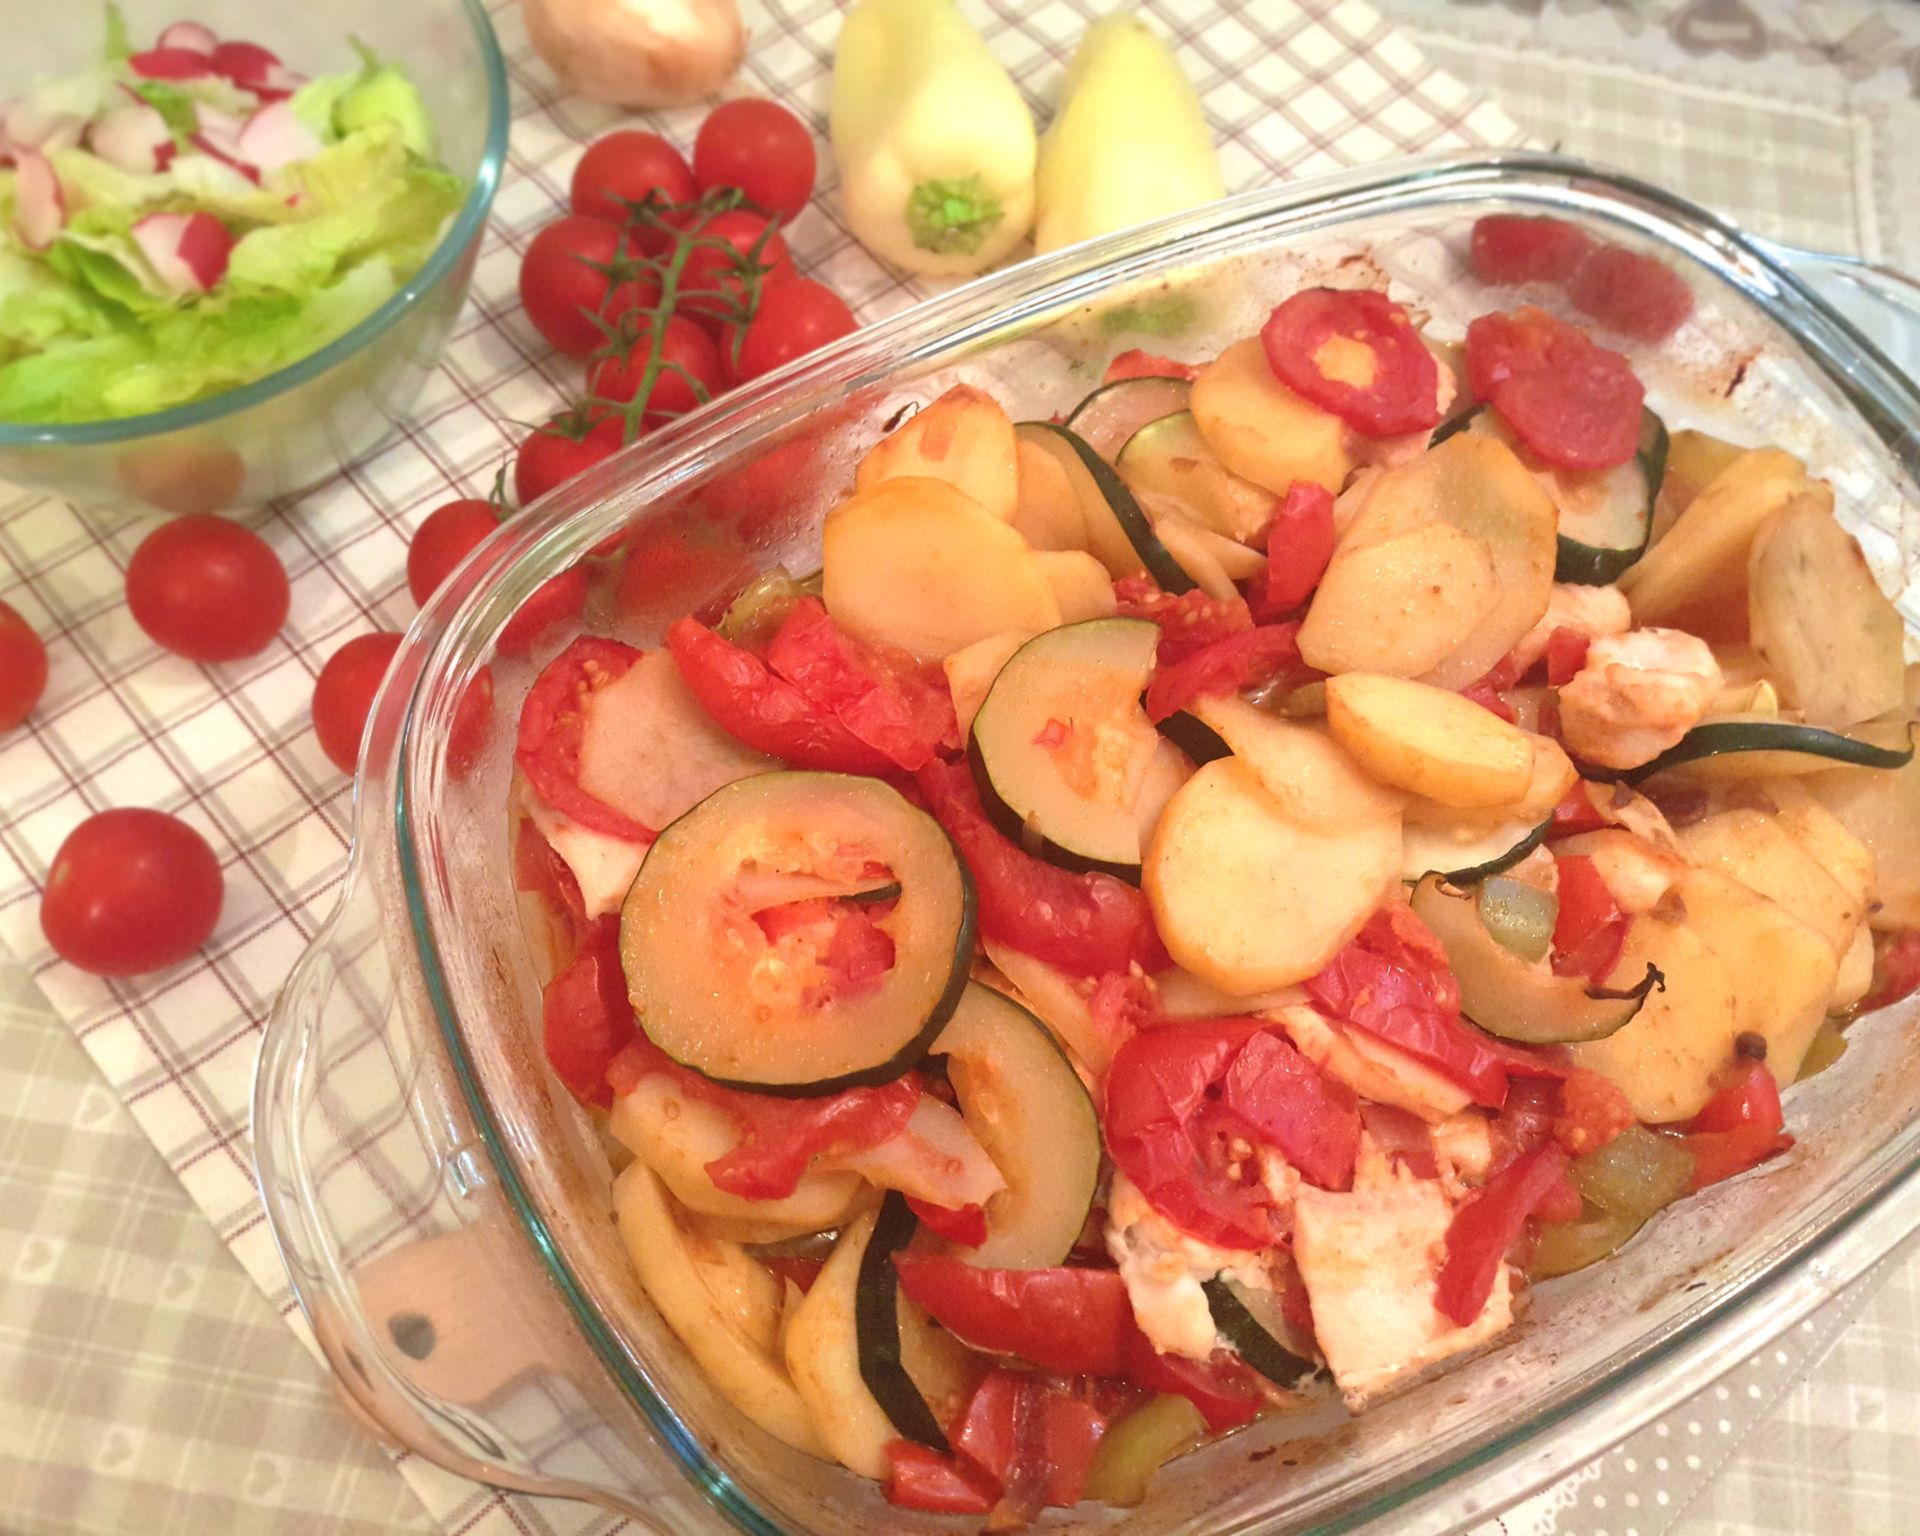 Zapekacia misa plná zeleniny-cuketa, paradajky, paprika so zemiakmi a rybou-pangasiom